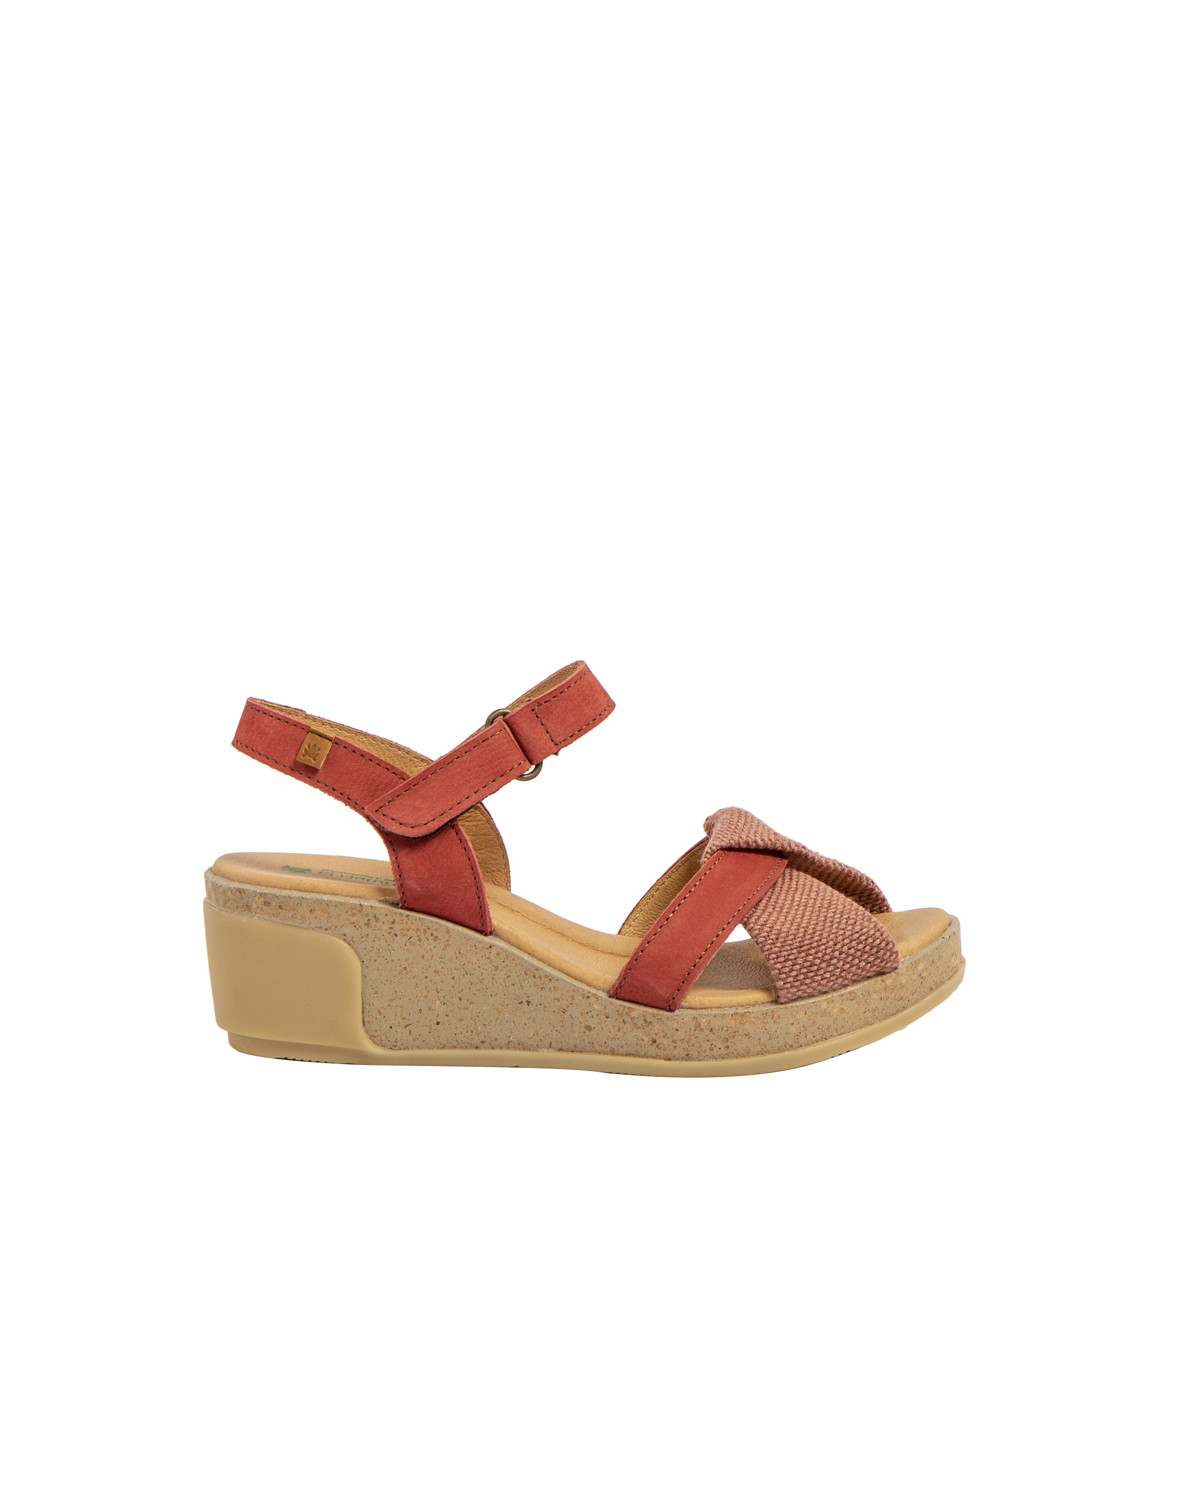 Sandales confortables compensées en cuir torsadé - Rouge - El naturalista